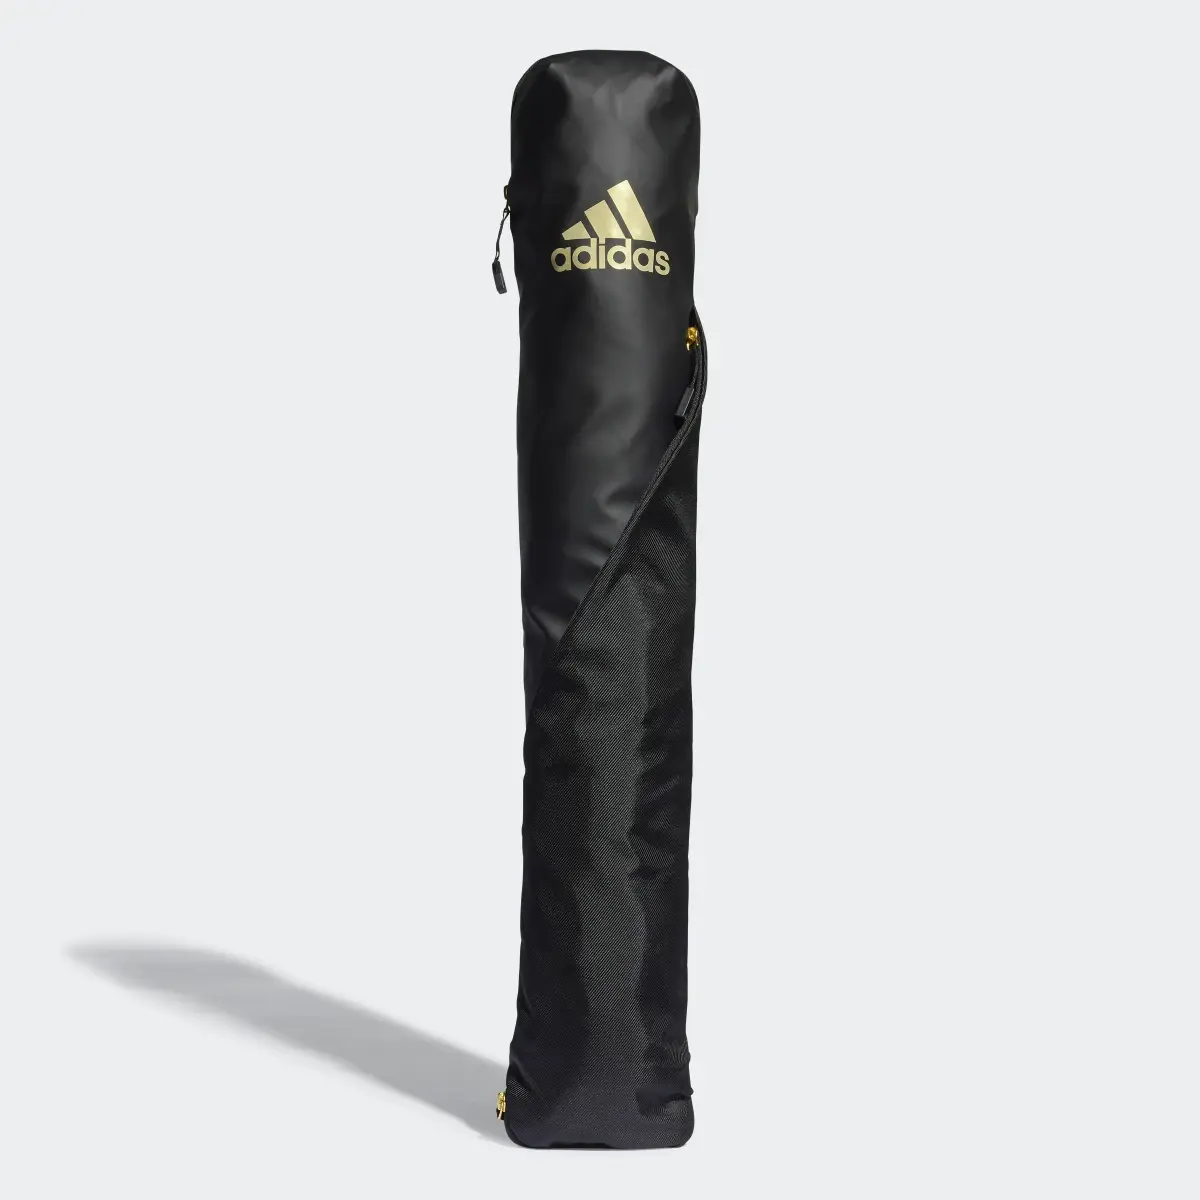 Adidas VS.6 Black/Gold Stick Sleeve. 1